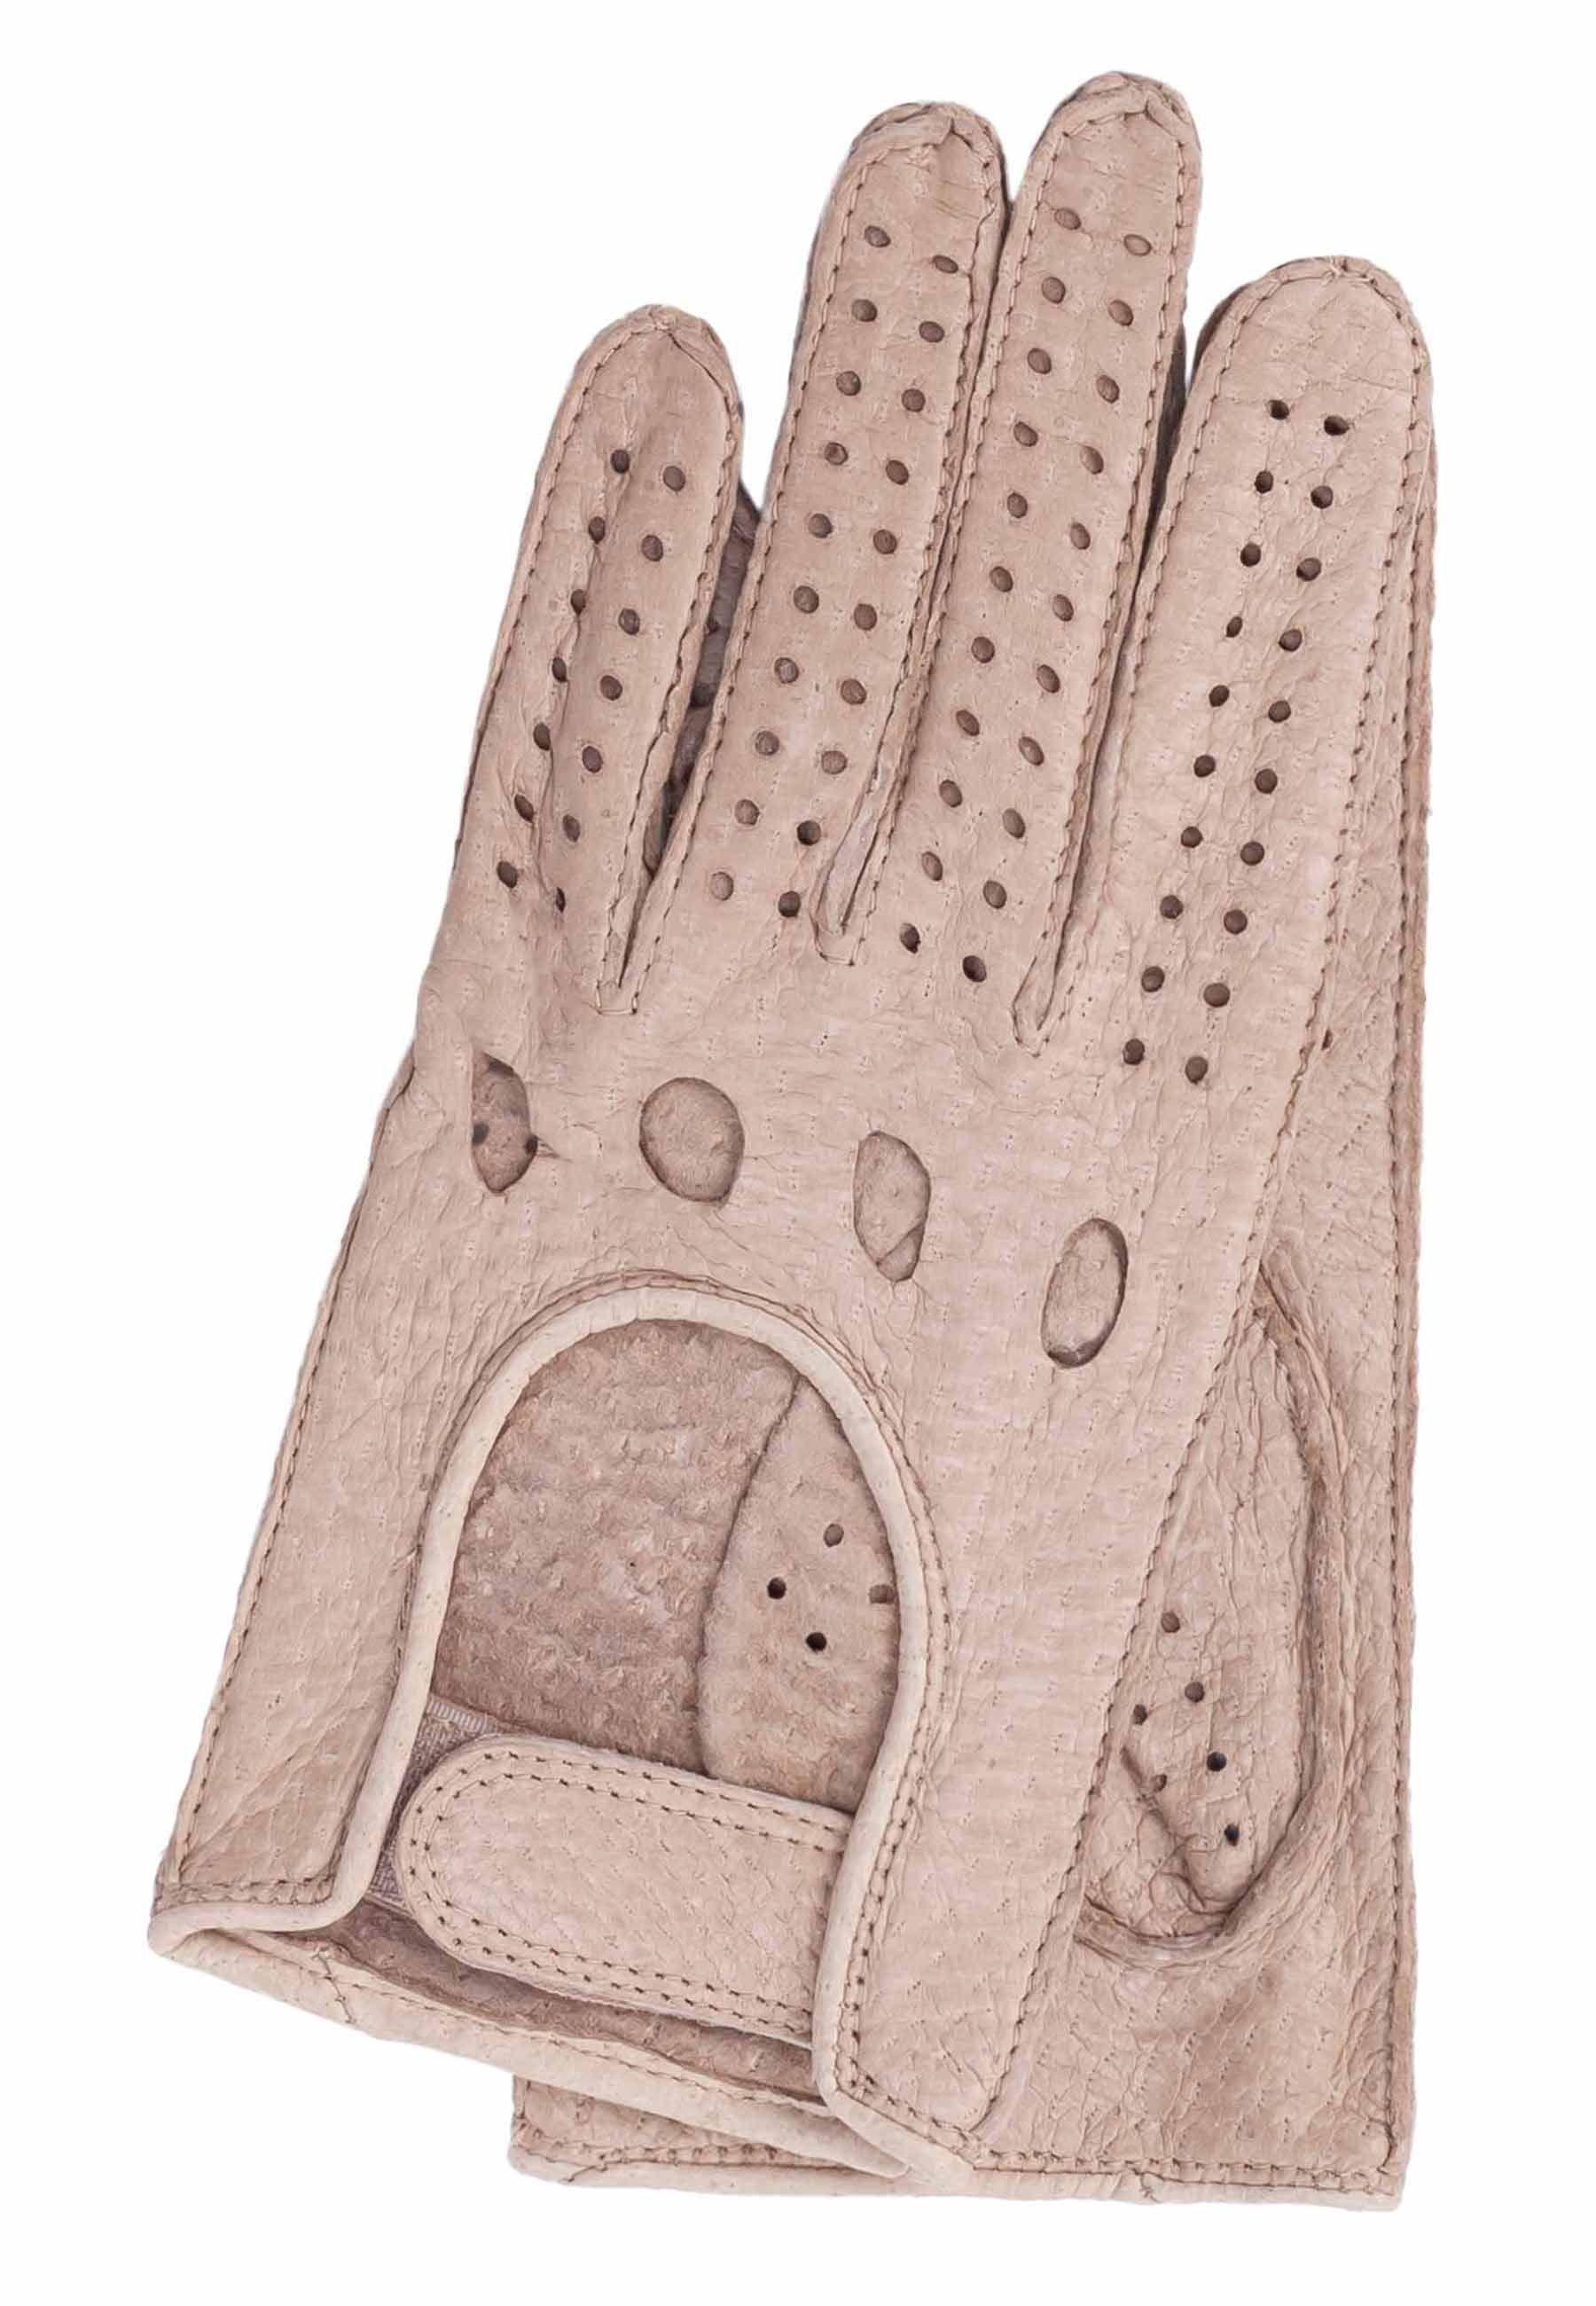 GRETCHEN Lederhandschuhe Peccary beige Driving in Autohandschuh-Design Womens Gloves klassischem